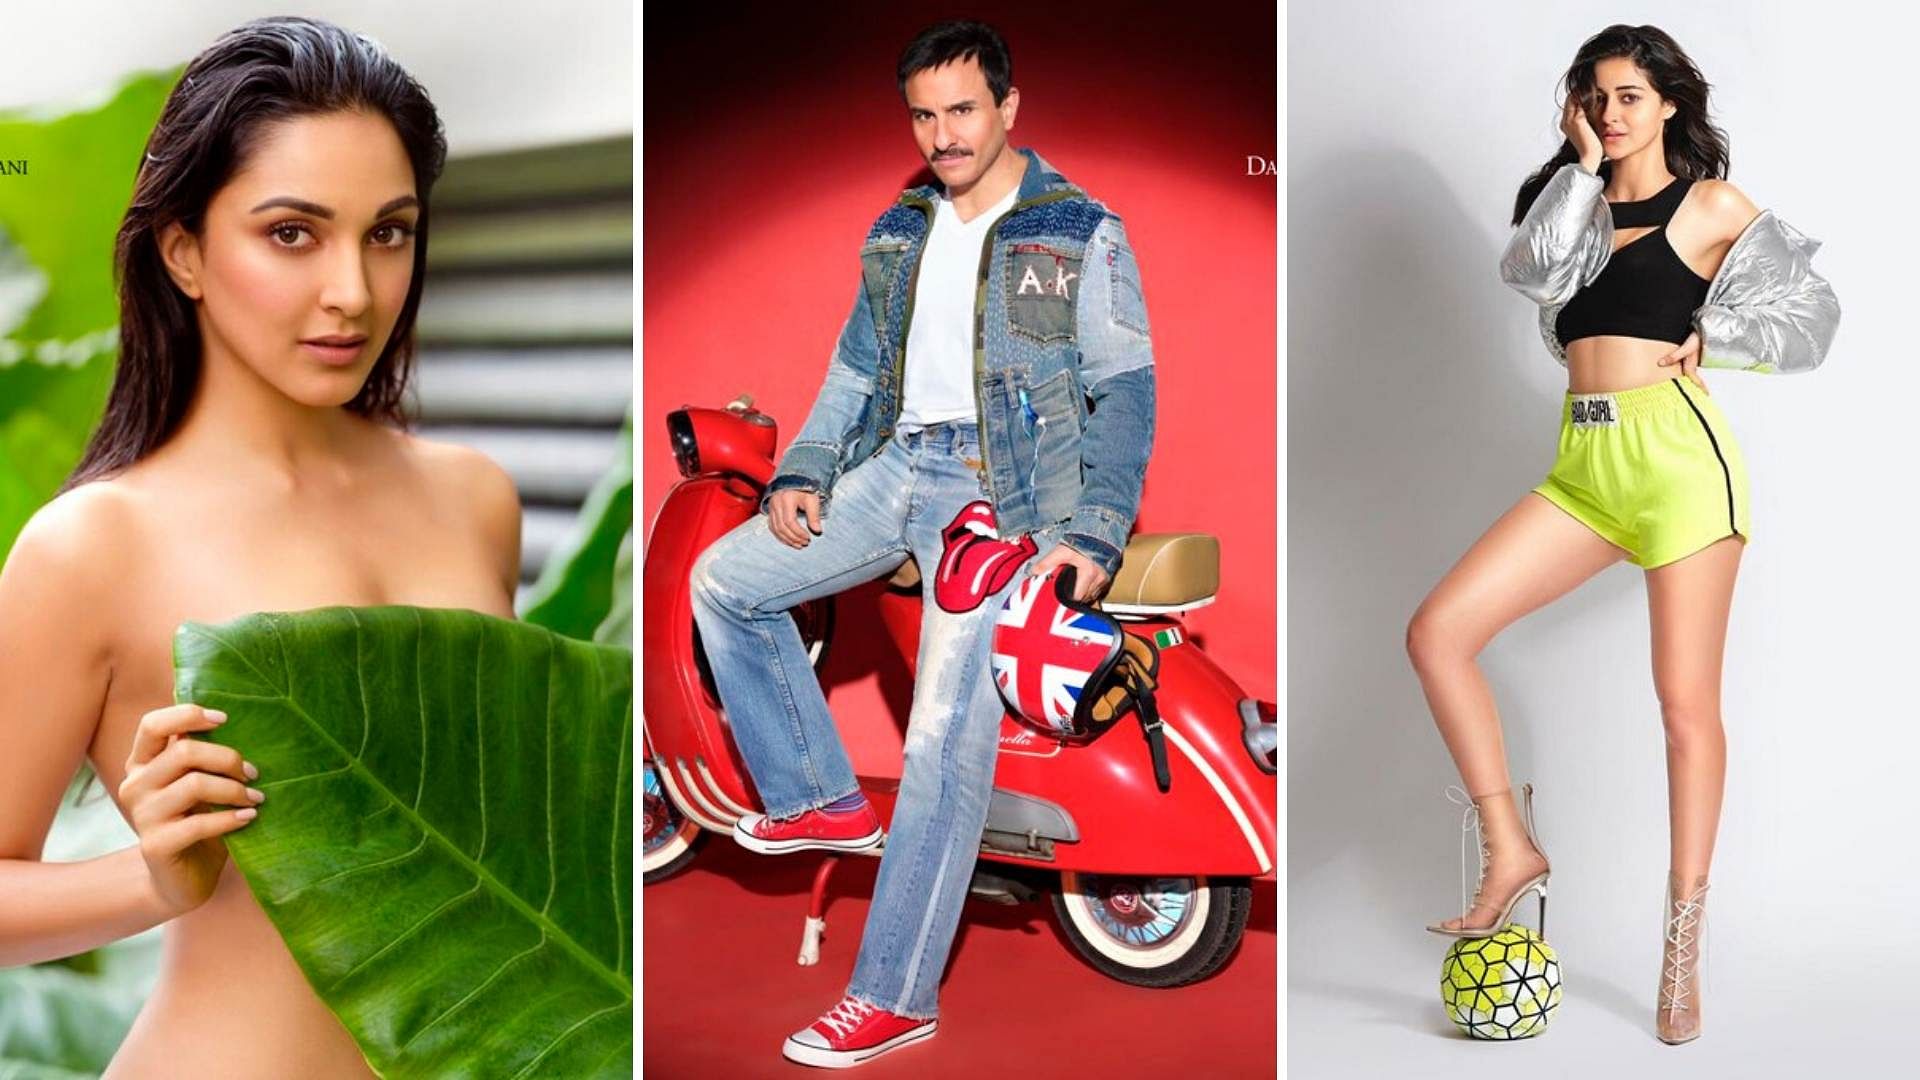 Kiara Advani, Saif Ali Khan and Ananya Pandey pose for Daboo Ratnani’s calendar shoot.